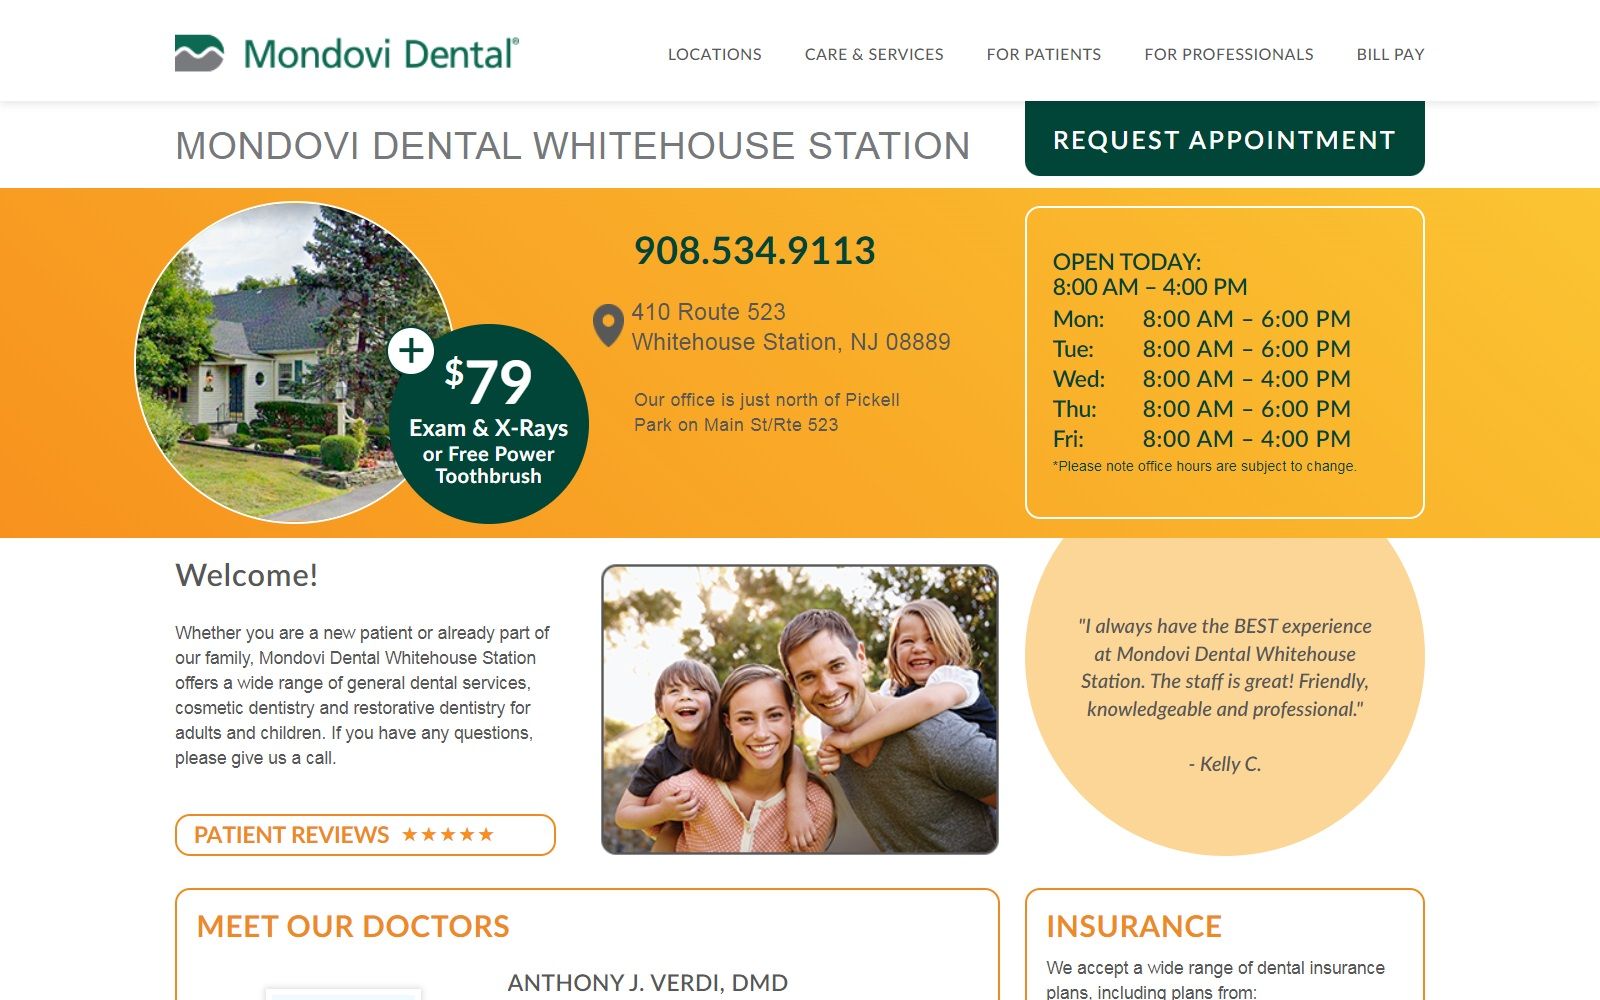 mondovidental.com_locations_new-jersey-dental-centers_whitehouse-station-nj screenshot